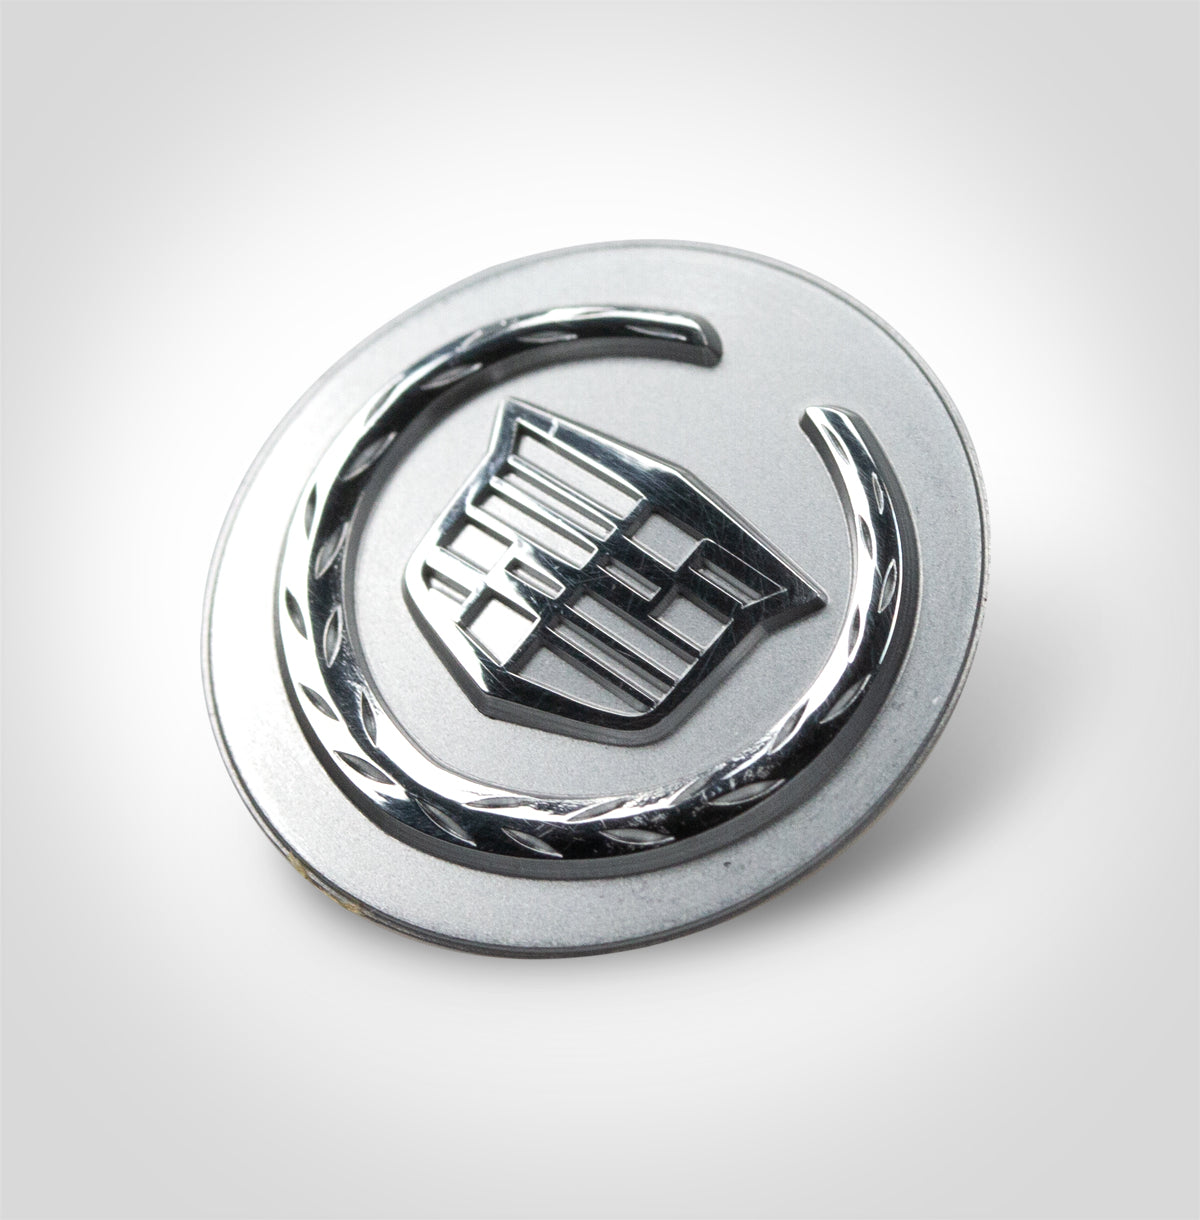 Electroformed car badge for Cadillac